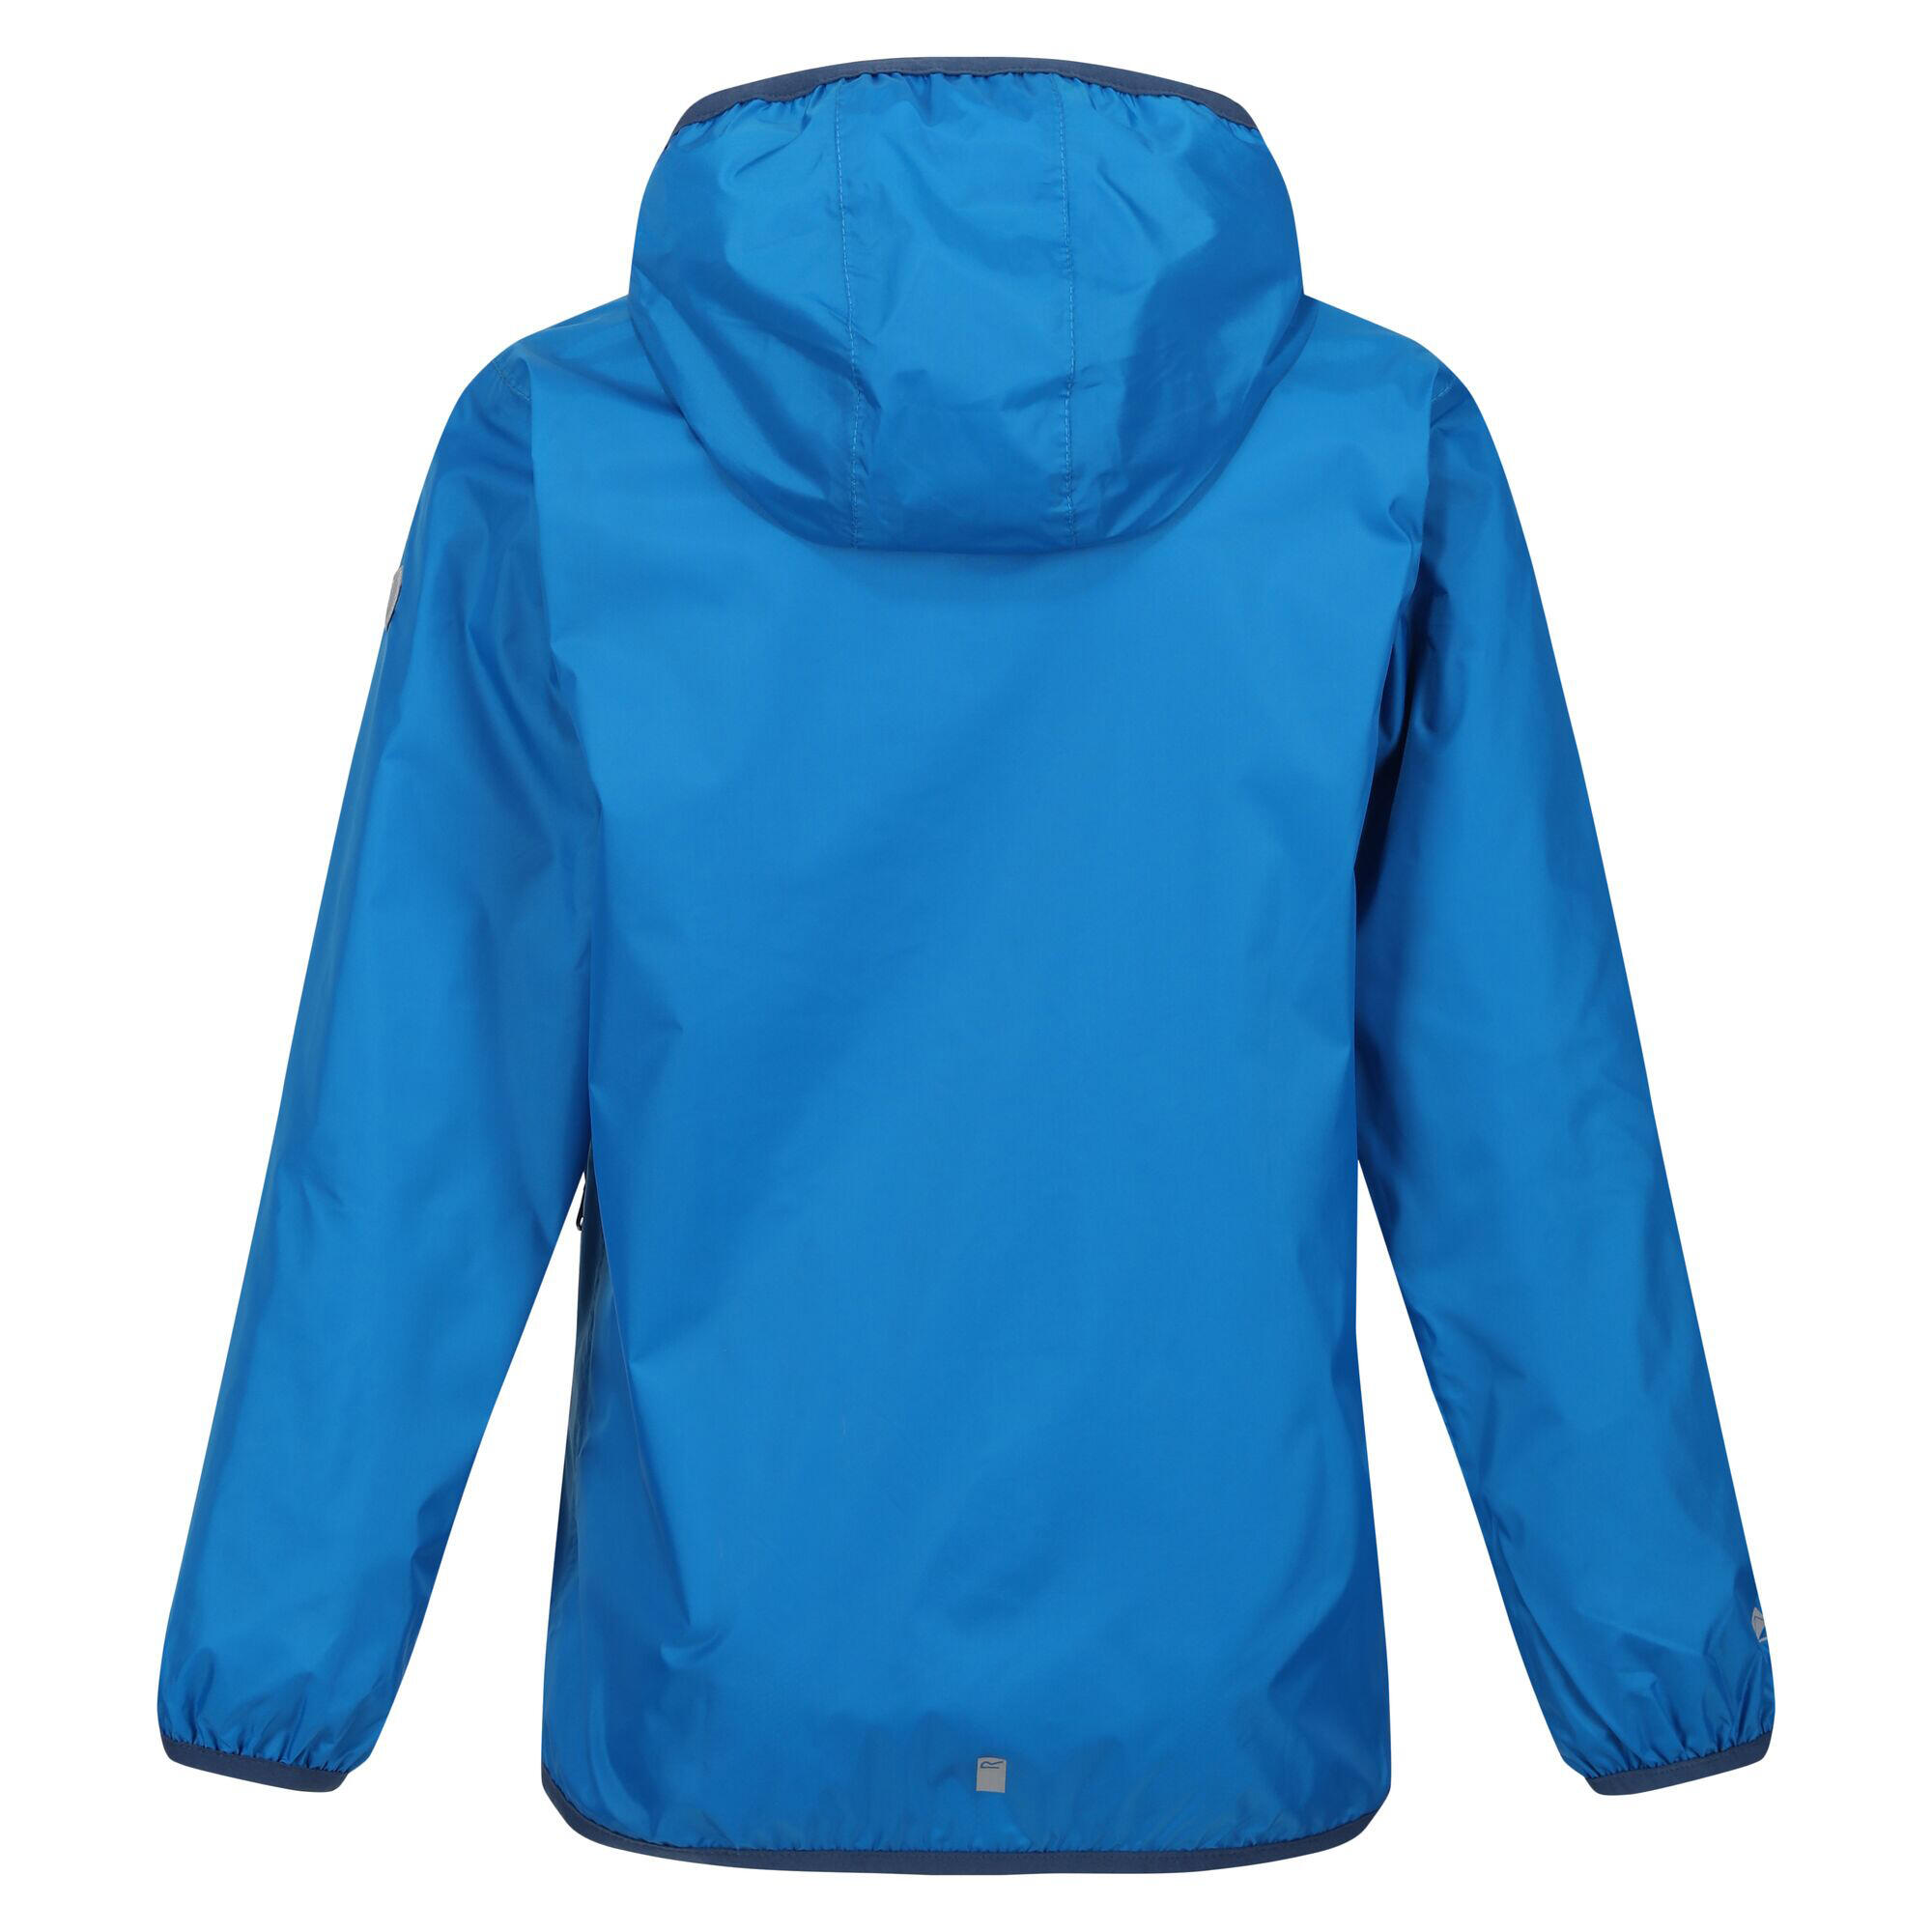 Great Outdoors Childrens/Kids Lever II Packaway Rain Jacket (Indigo Blue) 2/4